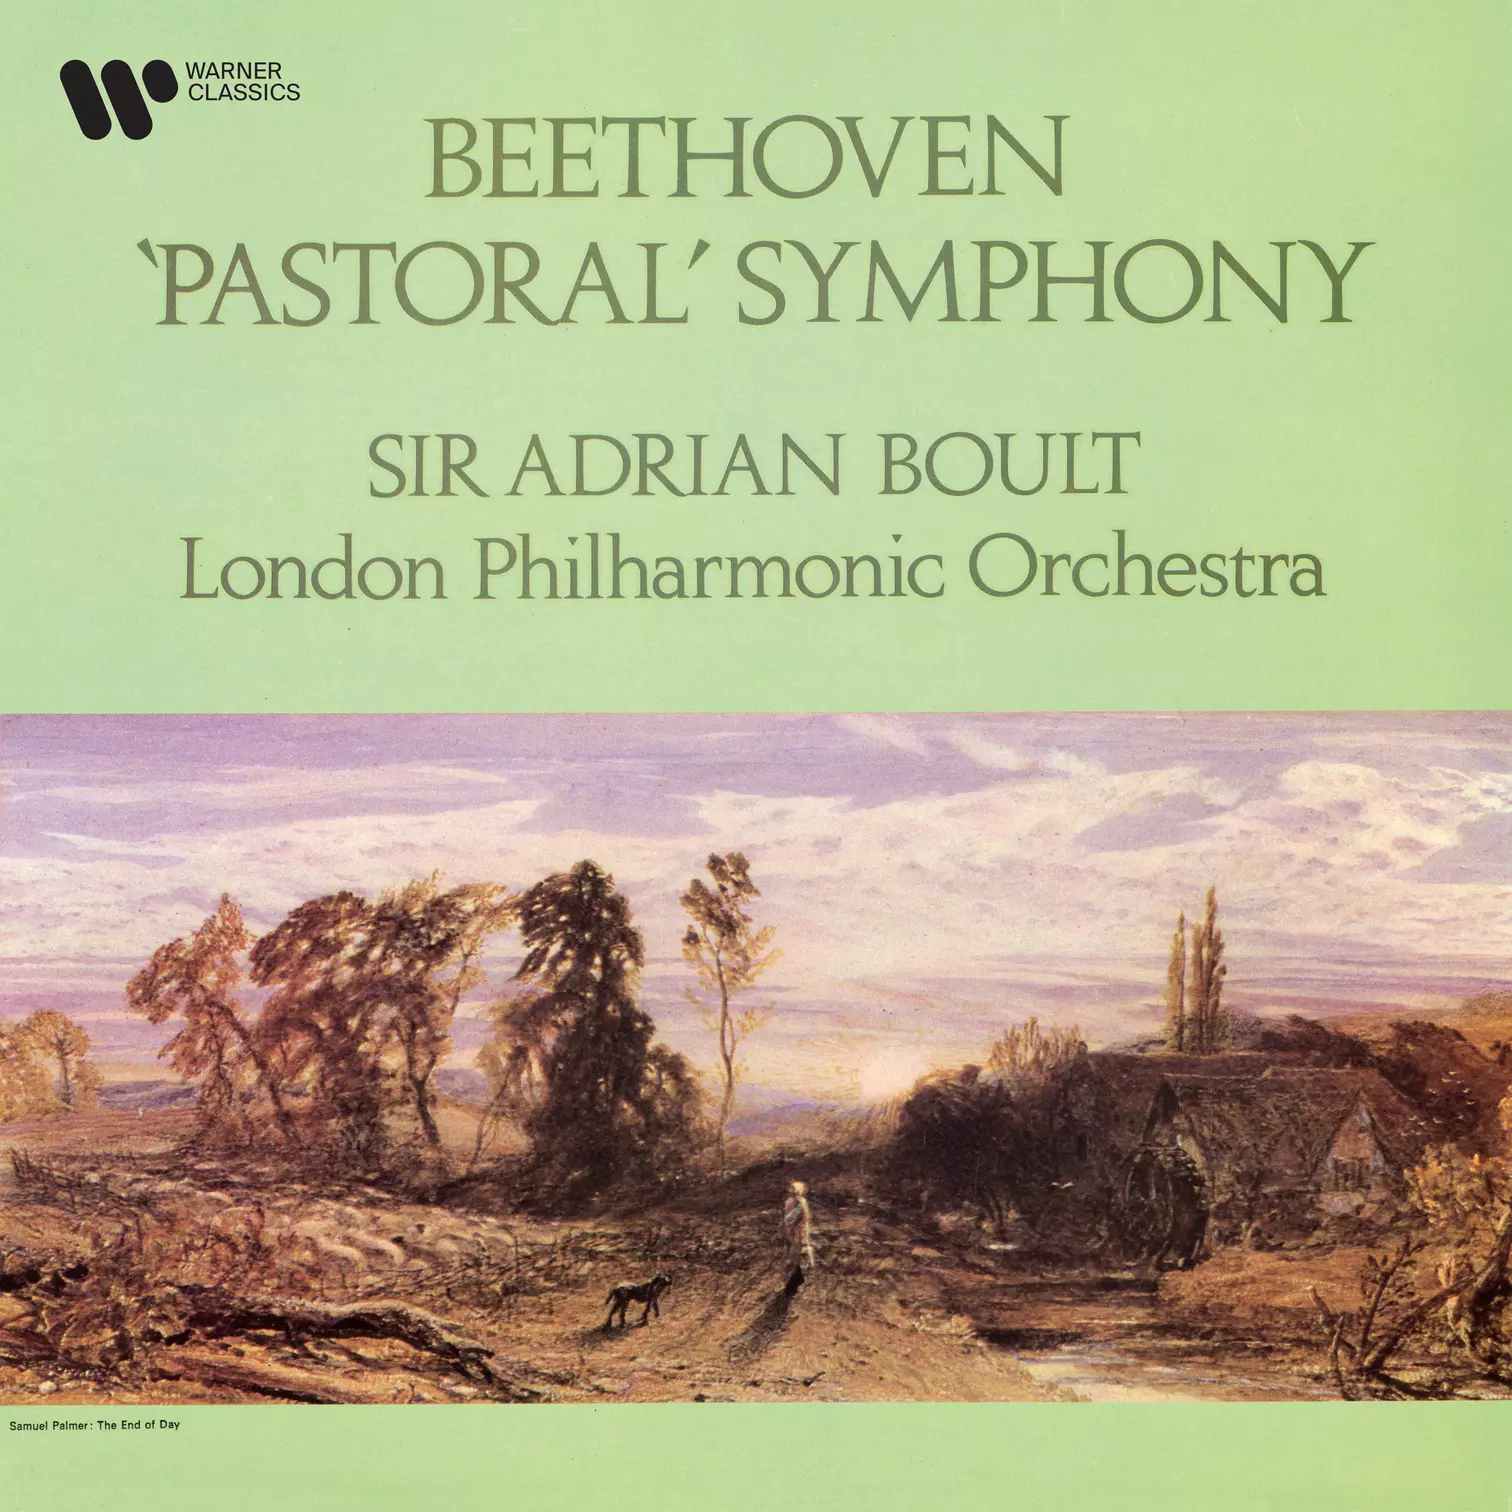 Beethoven: Symphony No. 6 “Pastoral”